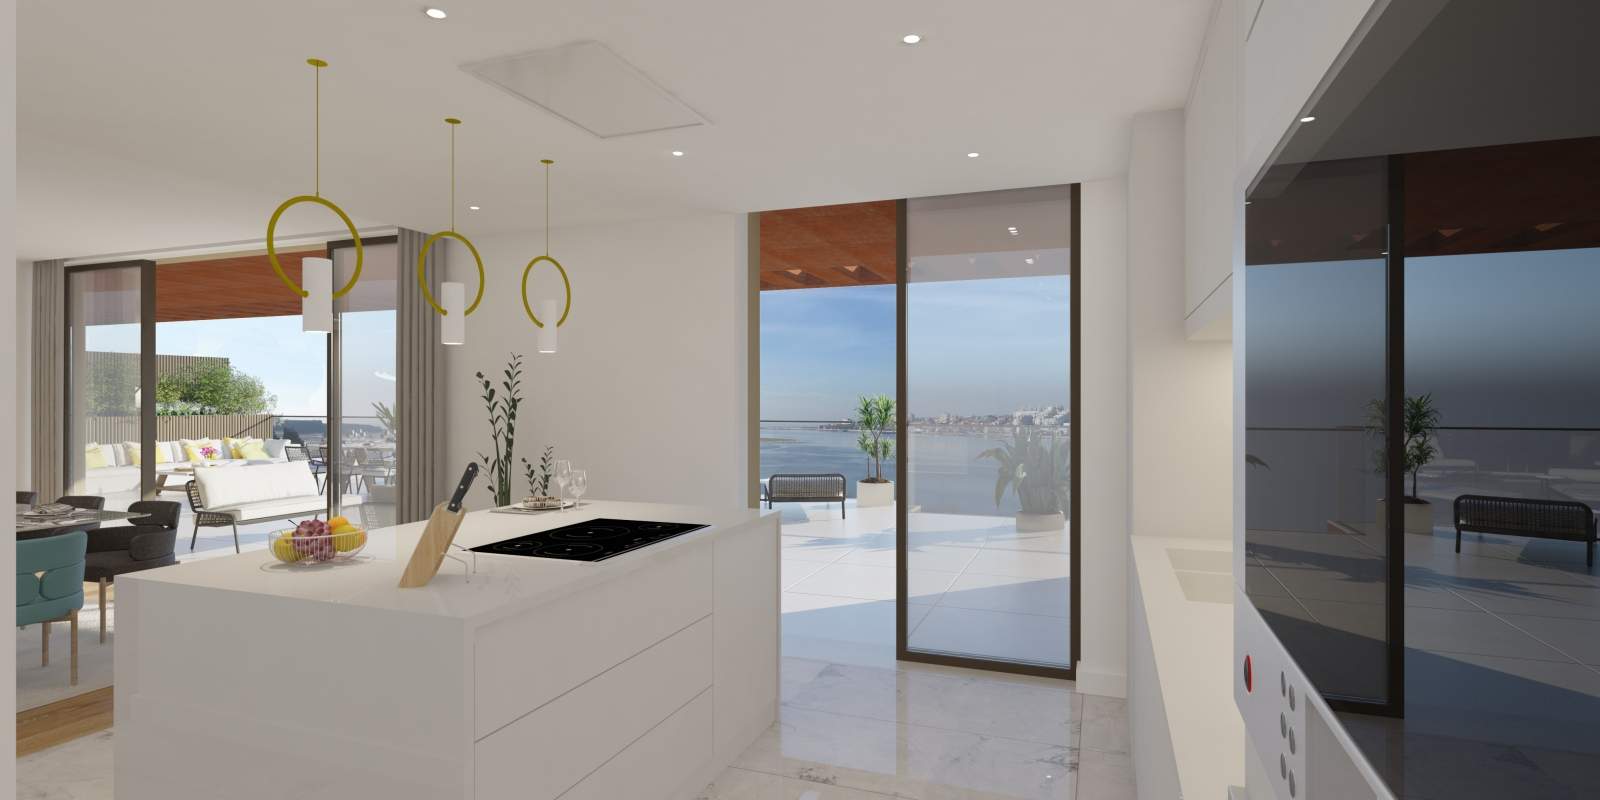 Apartment for sale with terrace, in exclusive condominium, V. N. Gaia, Porto, Portugal_175432